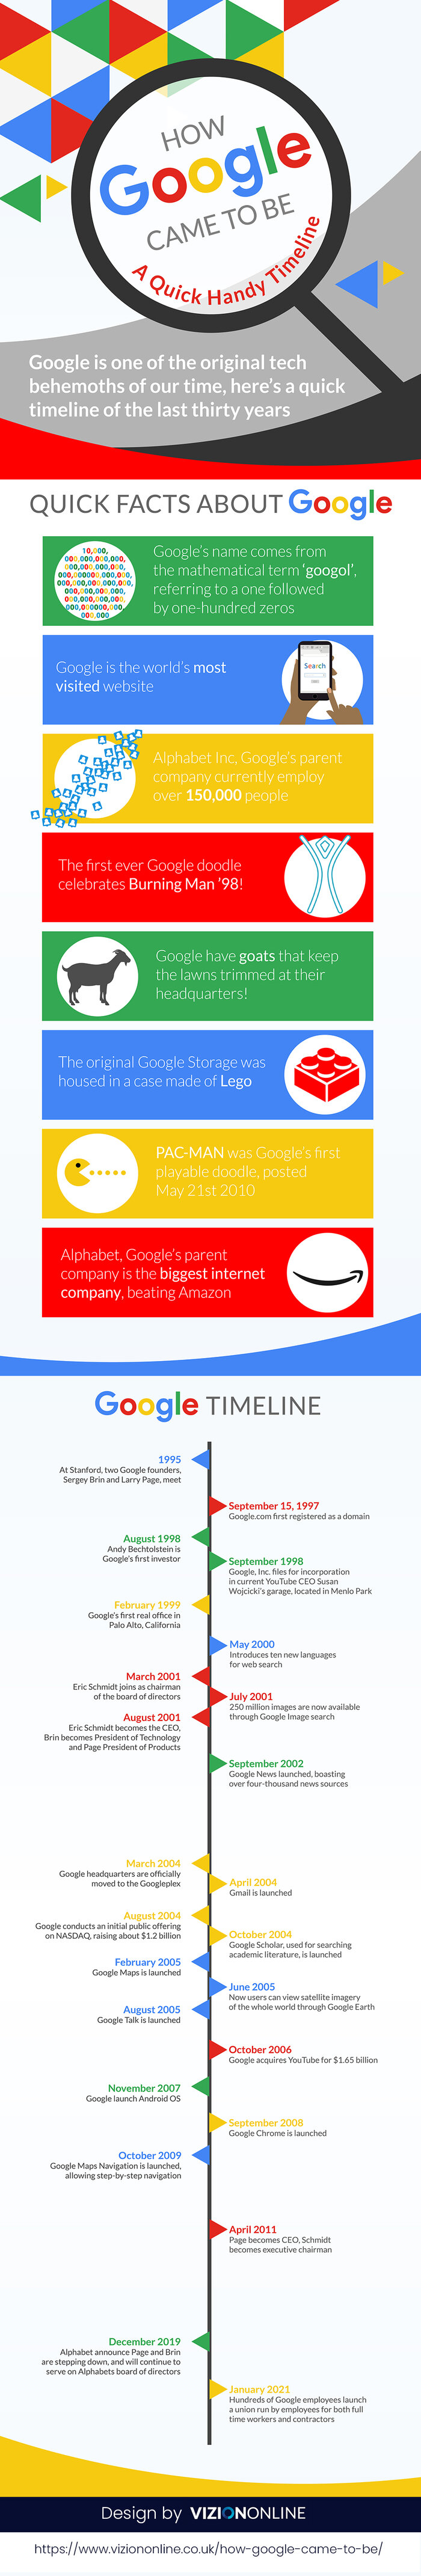 google history infographic